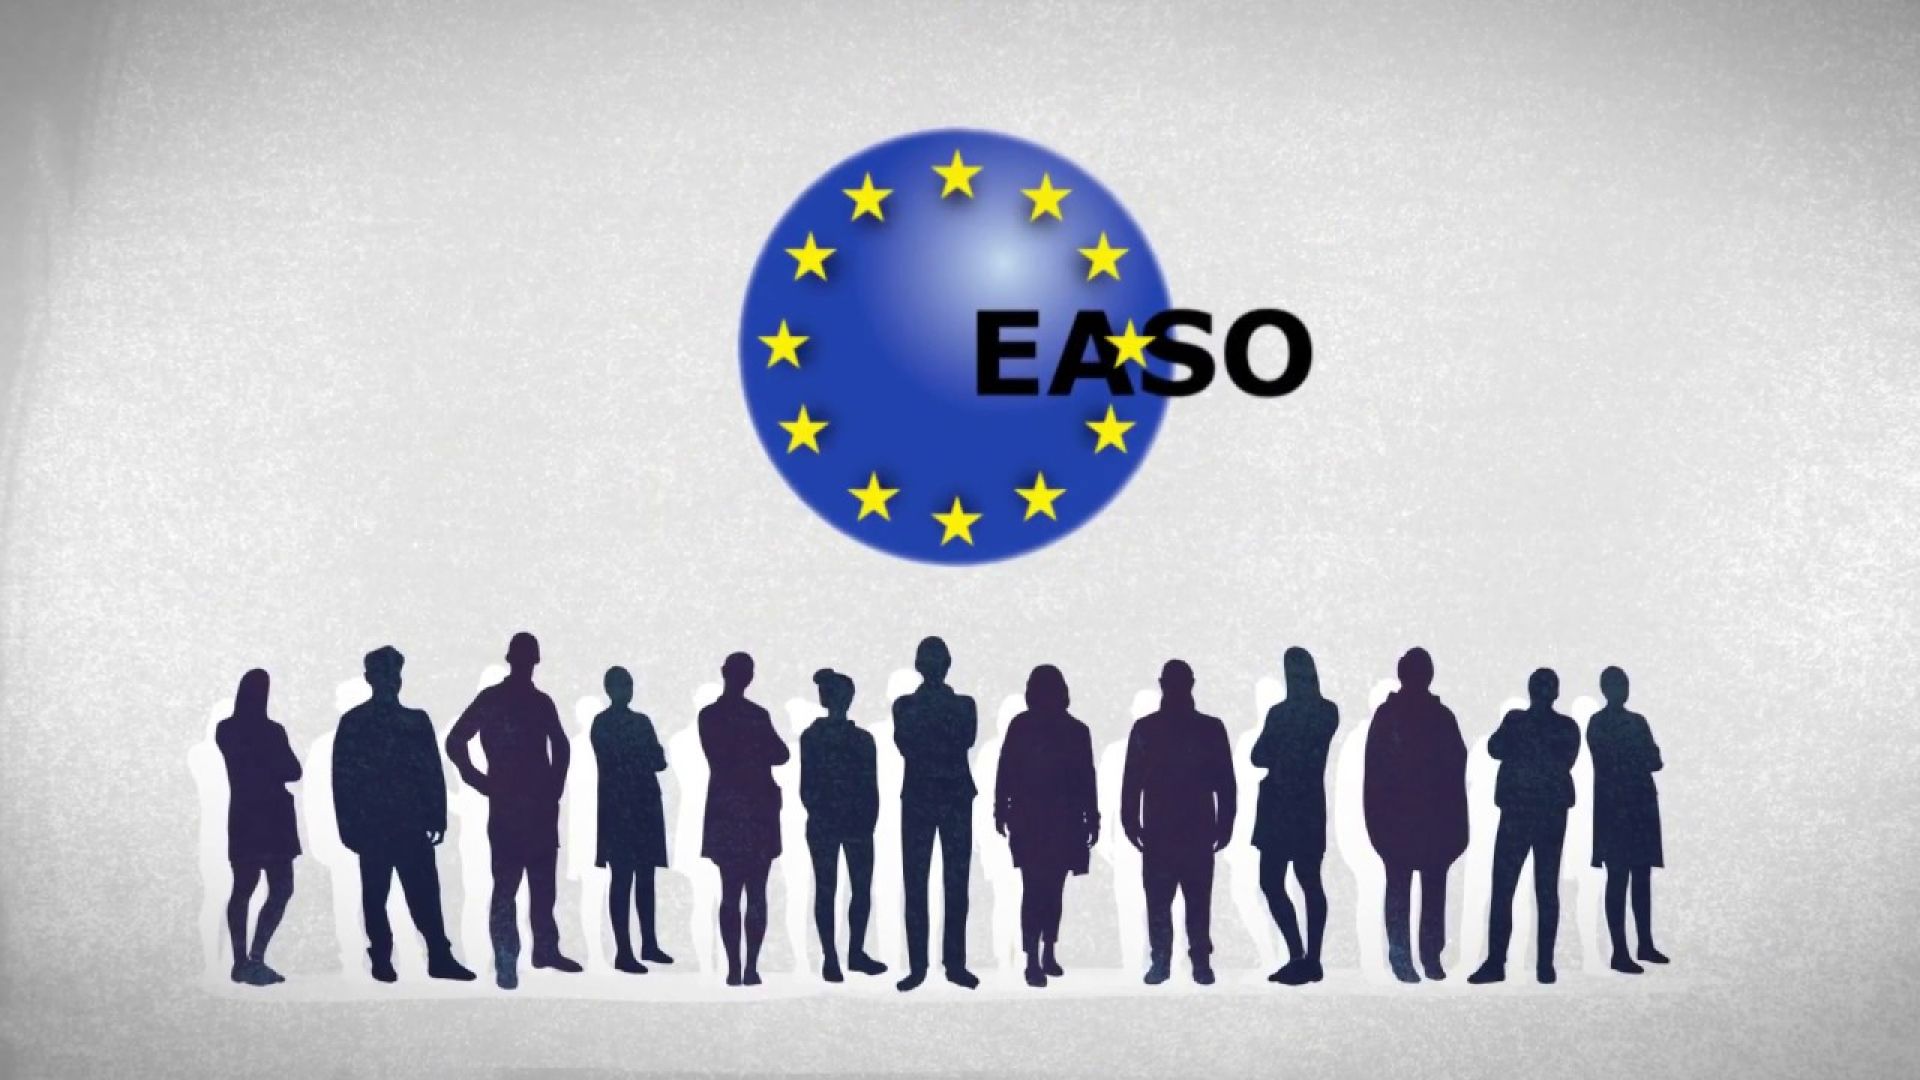 “European Asylum Support Office EASO